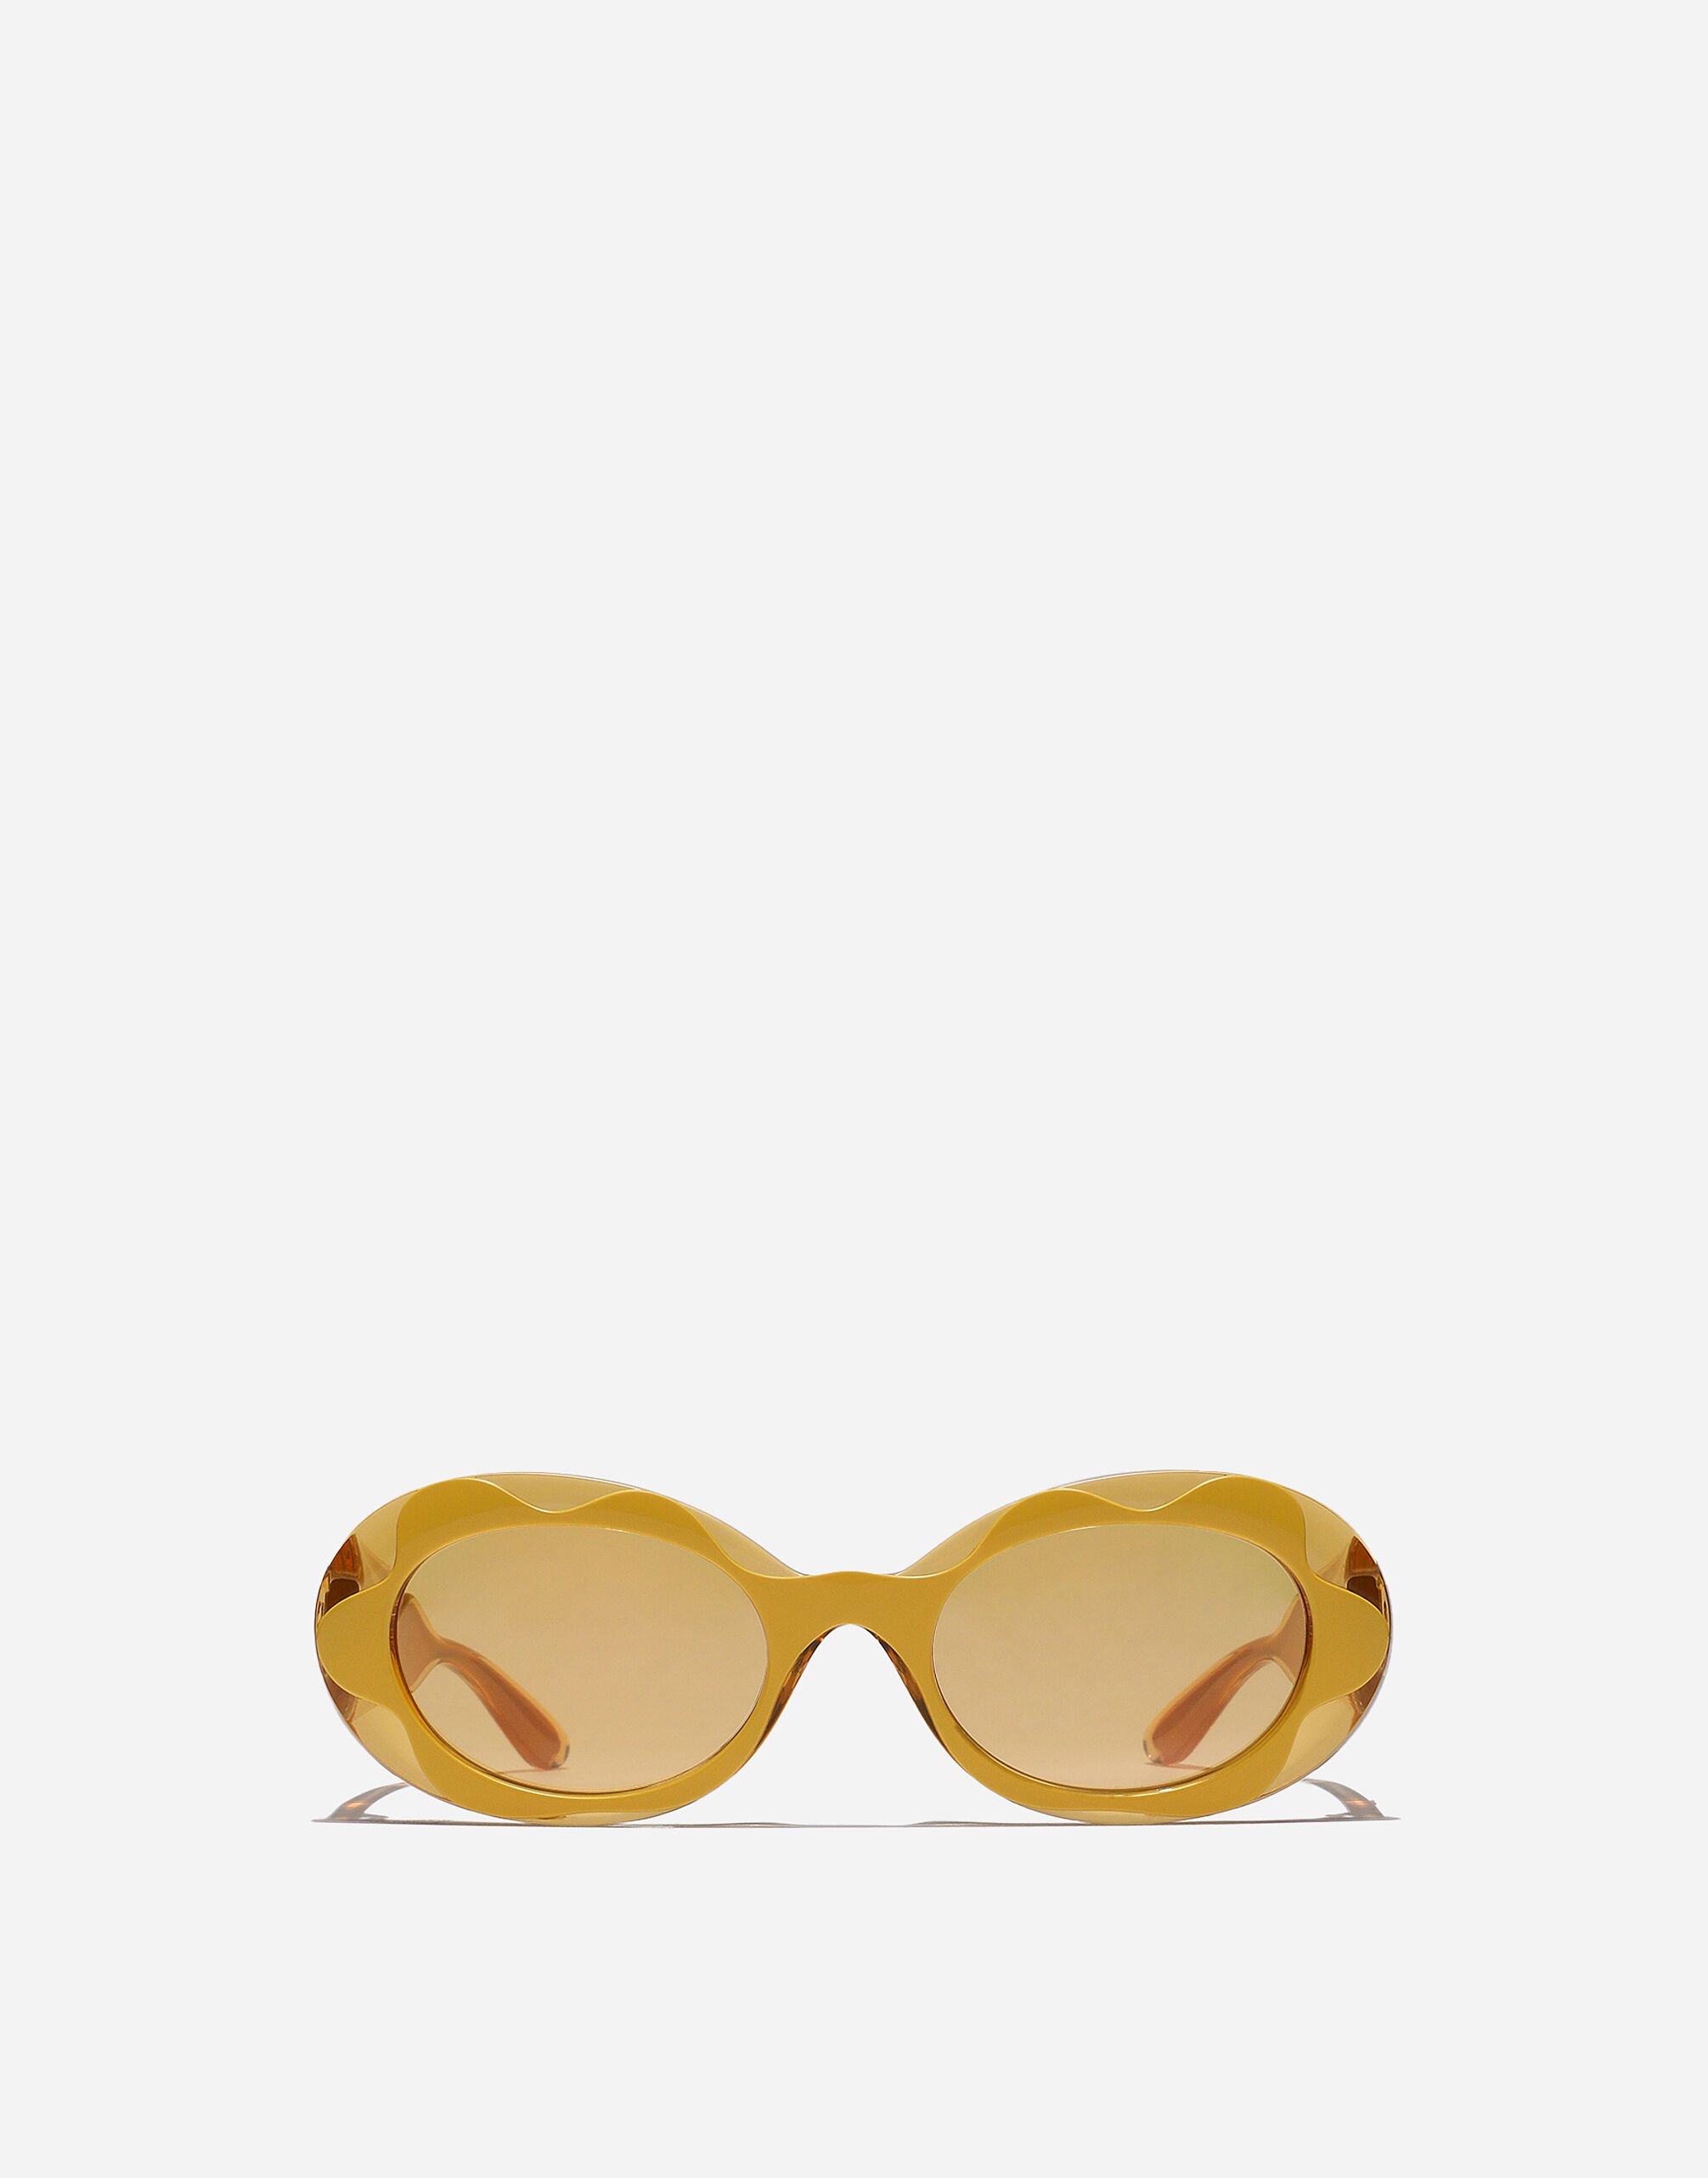 Dolce & Gabbana Flower Power sunglasses Print FS215AGDB4P